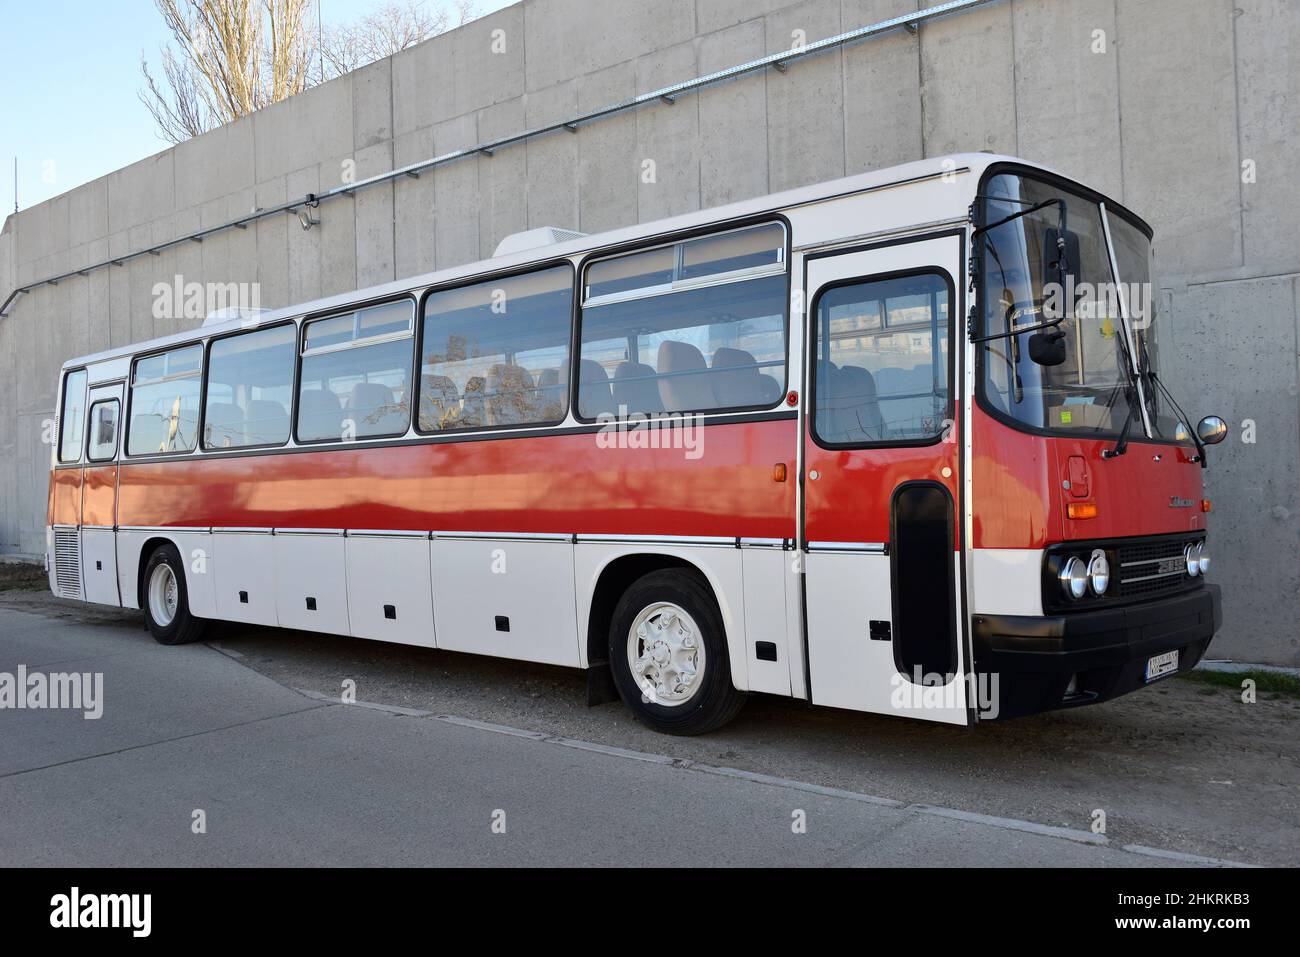 Ikarus Buses in Budapest 🇭🇺  IK 260, 280, 412 & 435🚌[2022] 